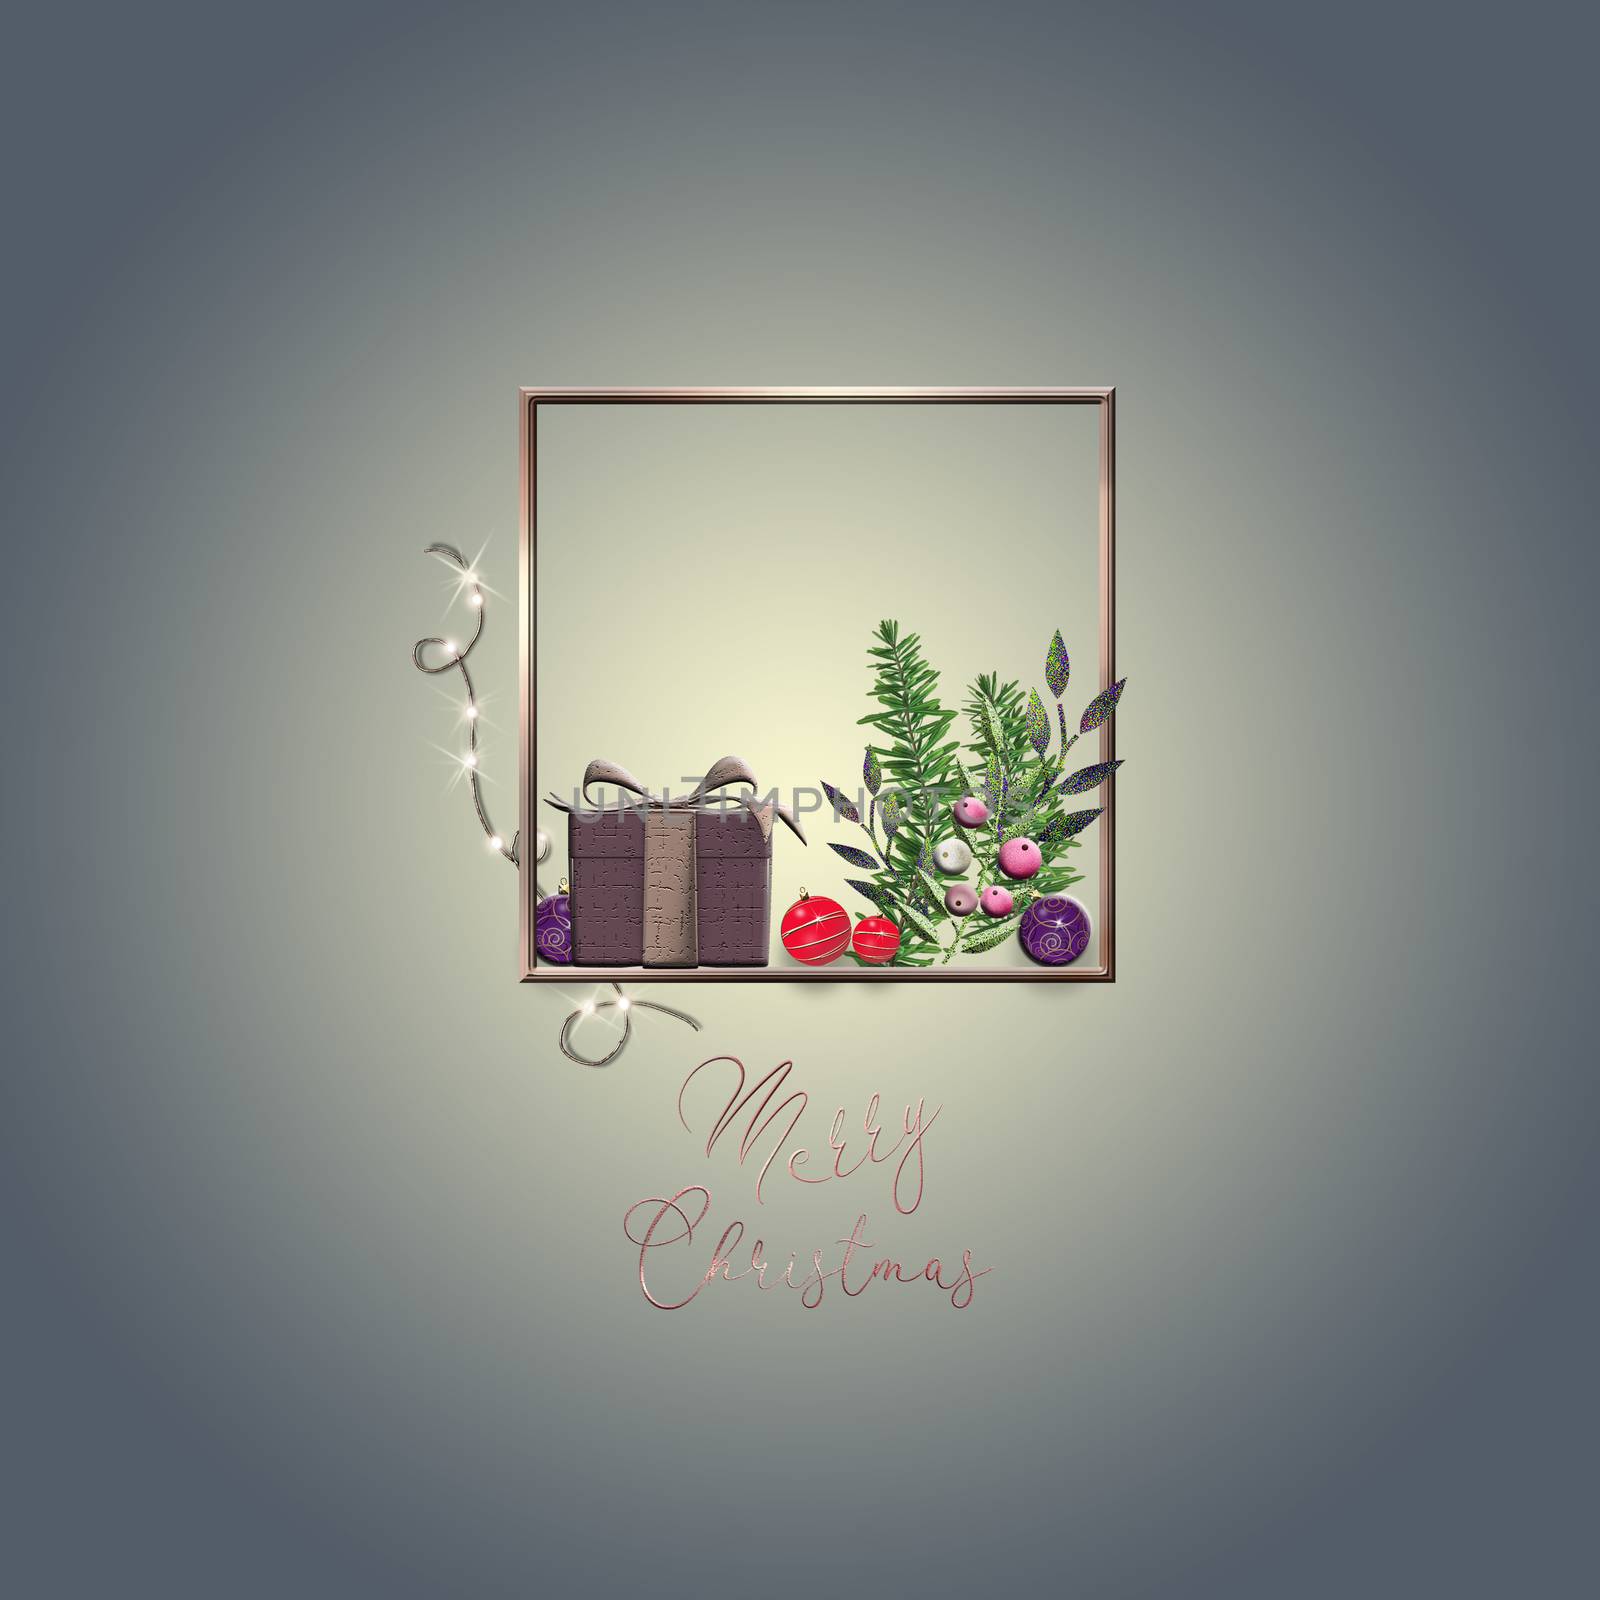 Christmas greeting card by NelliPolk